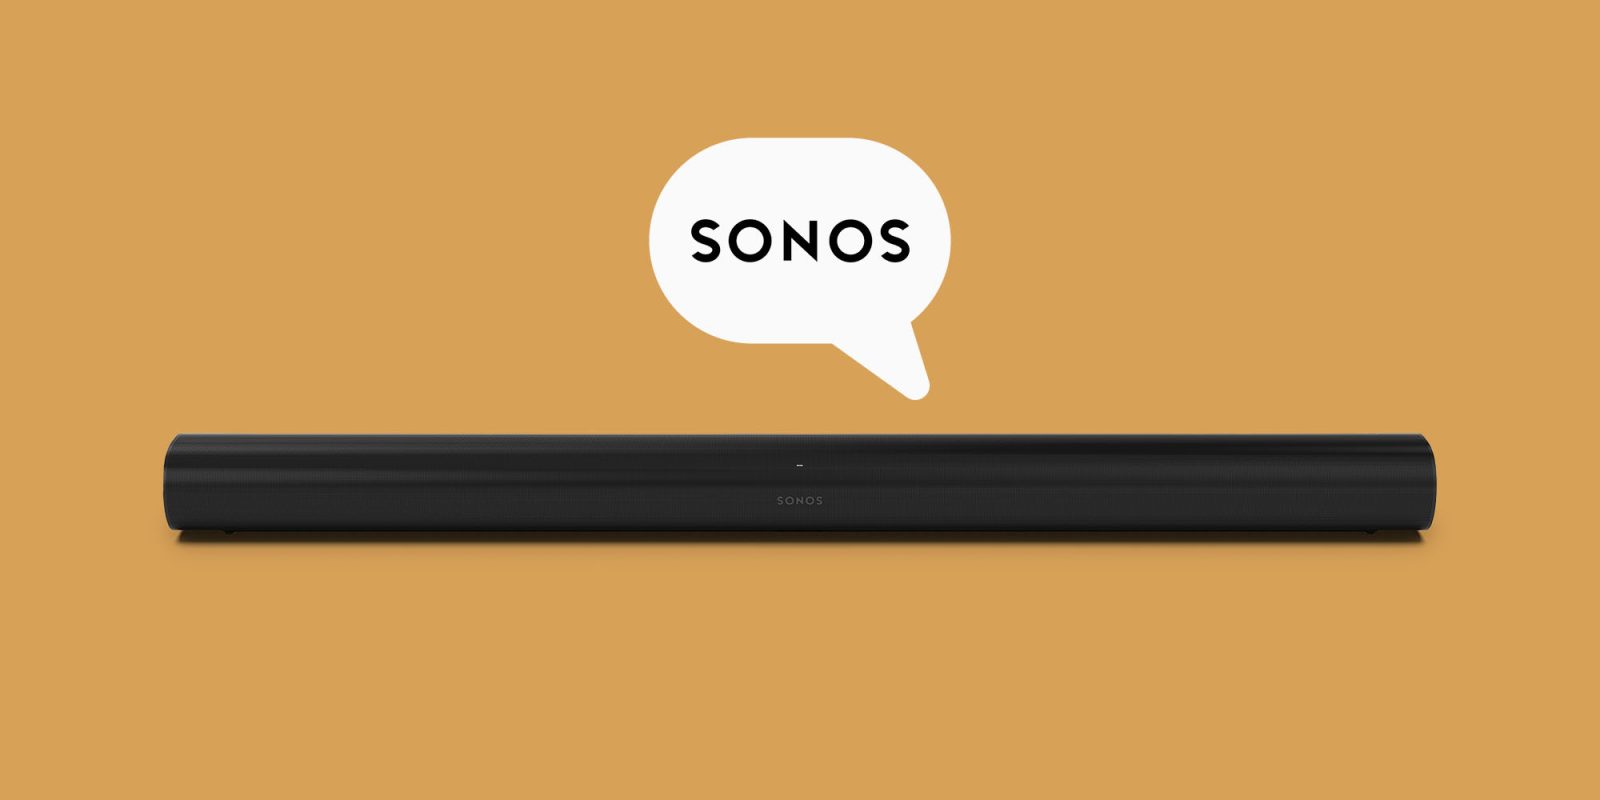 Kollega Mansion det samme Hey Sonos': Smart speaker maker is launching its own version of Siri -  9to5Mac